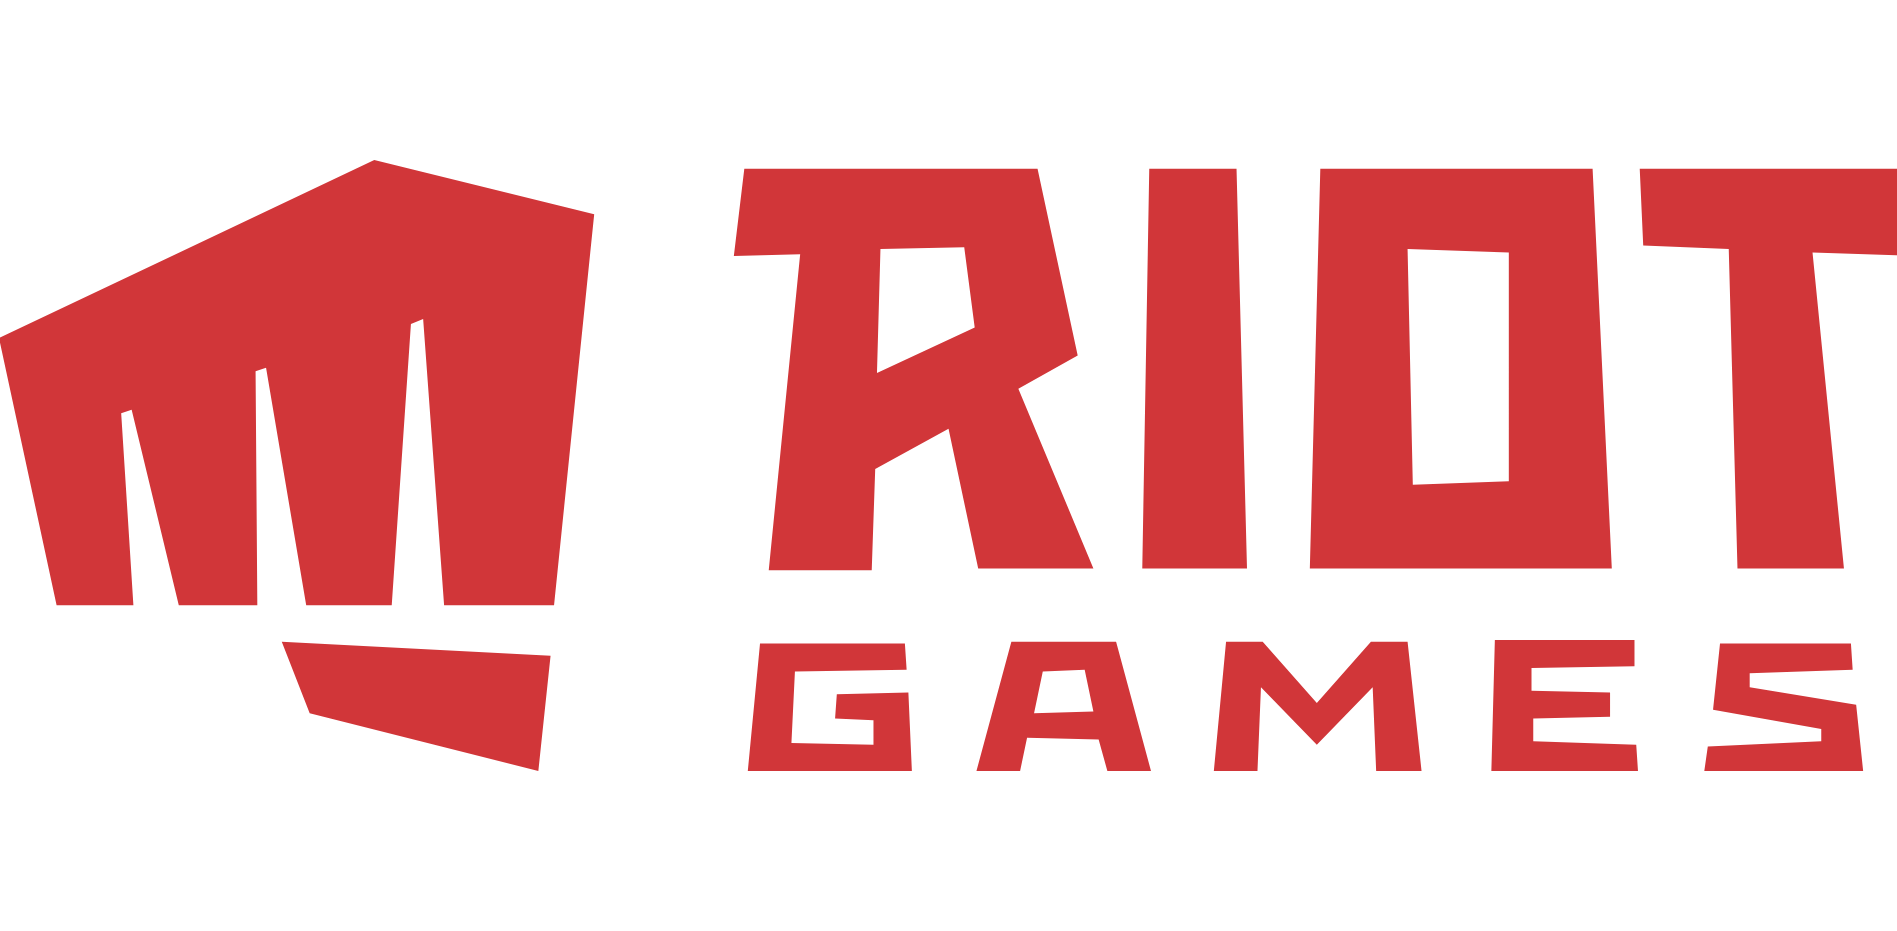 Logo de Riot Games